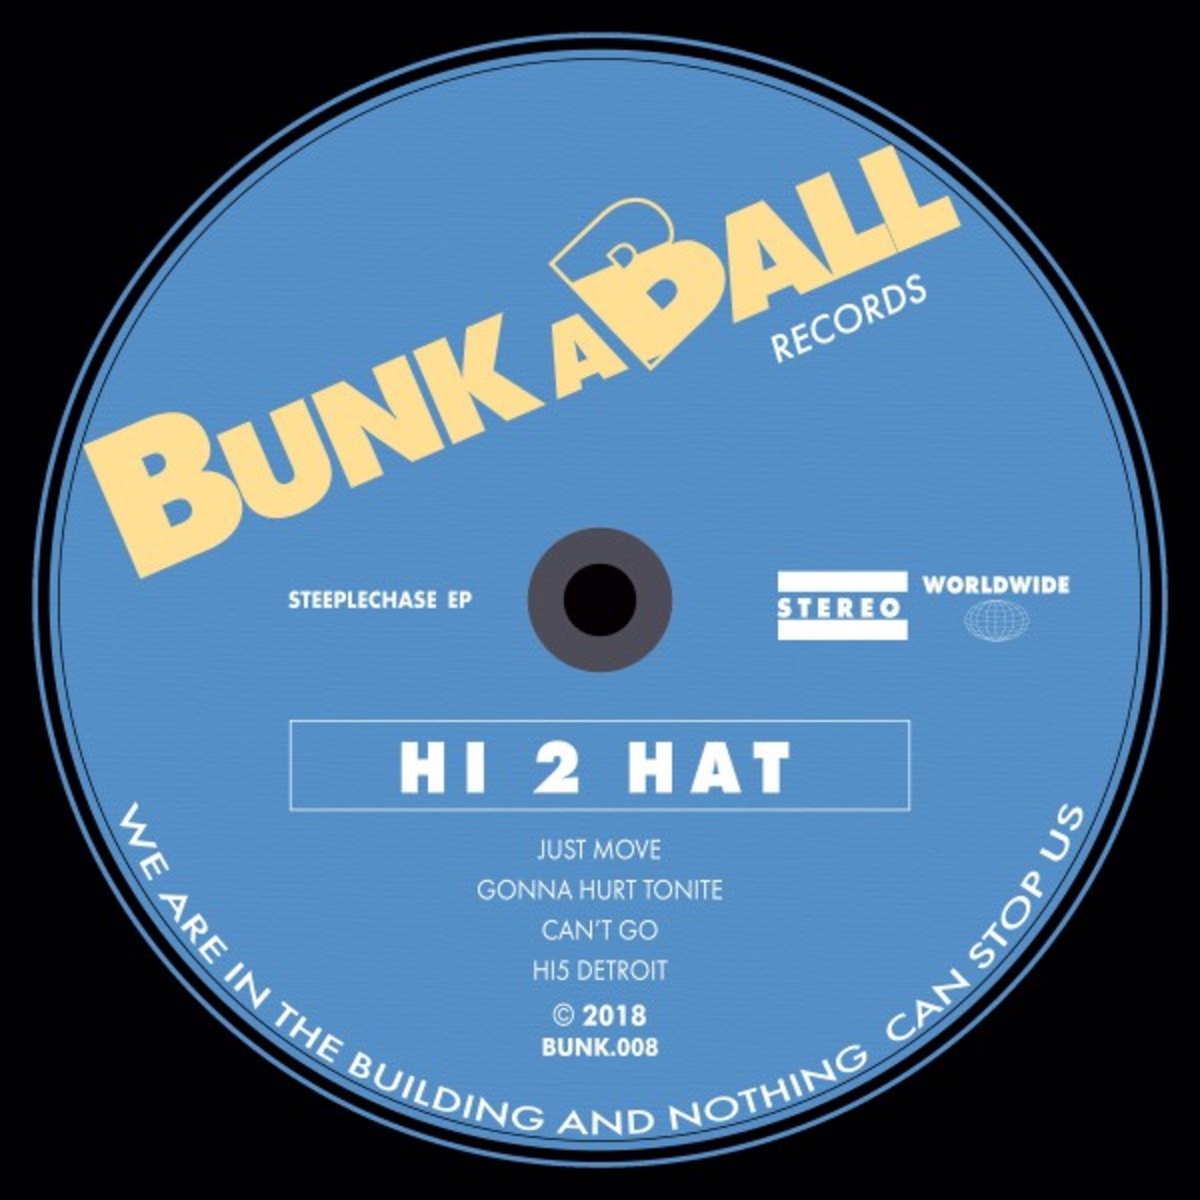 Hi 2 Hat - Steeplechase EP / Bunkaball Records